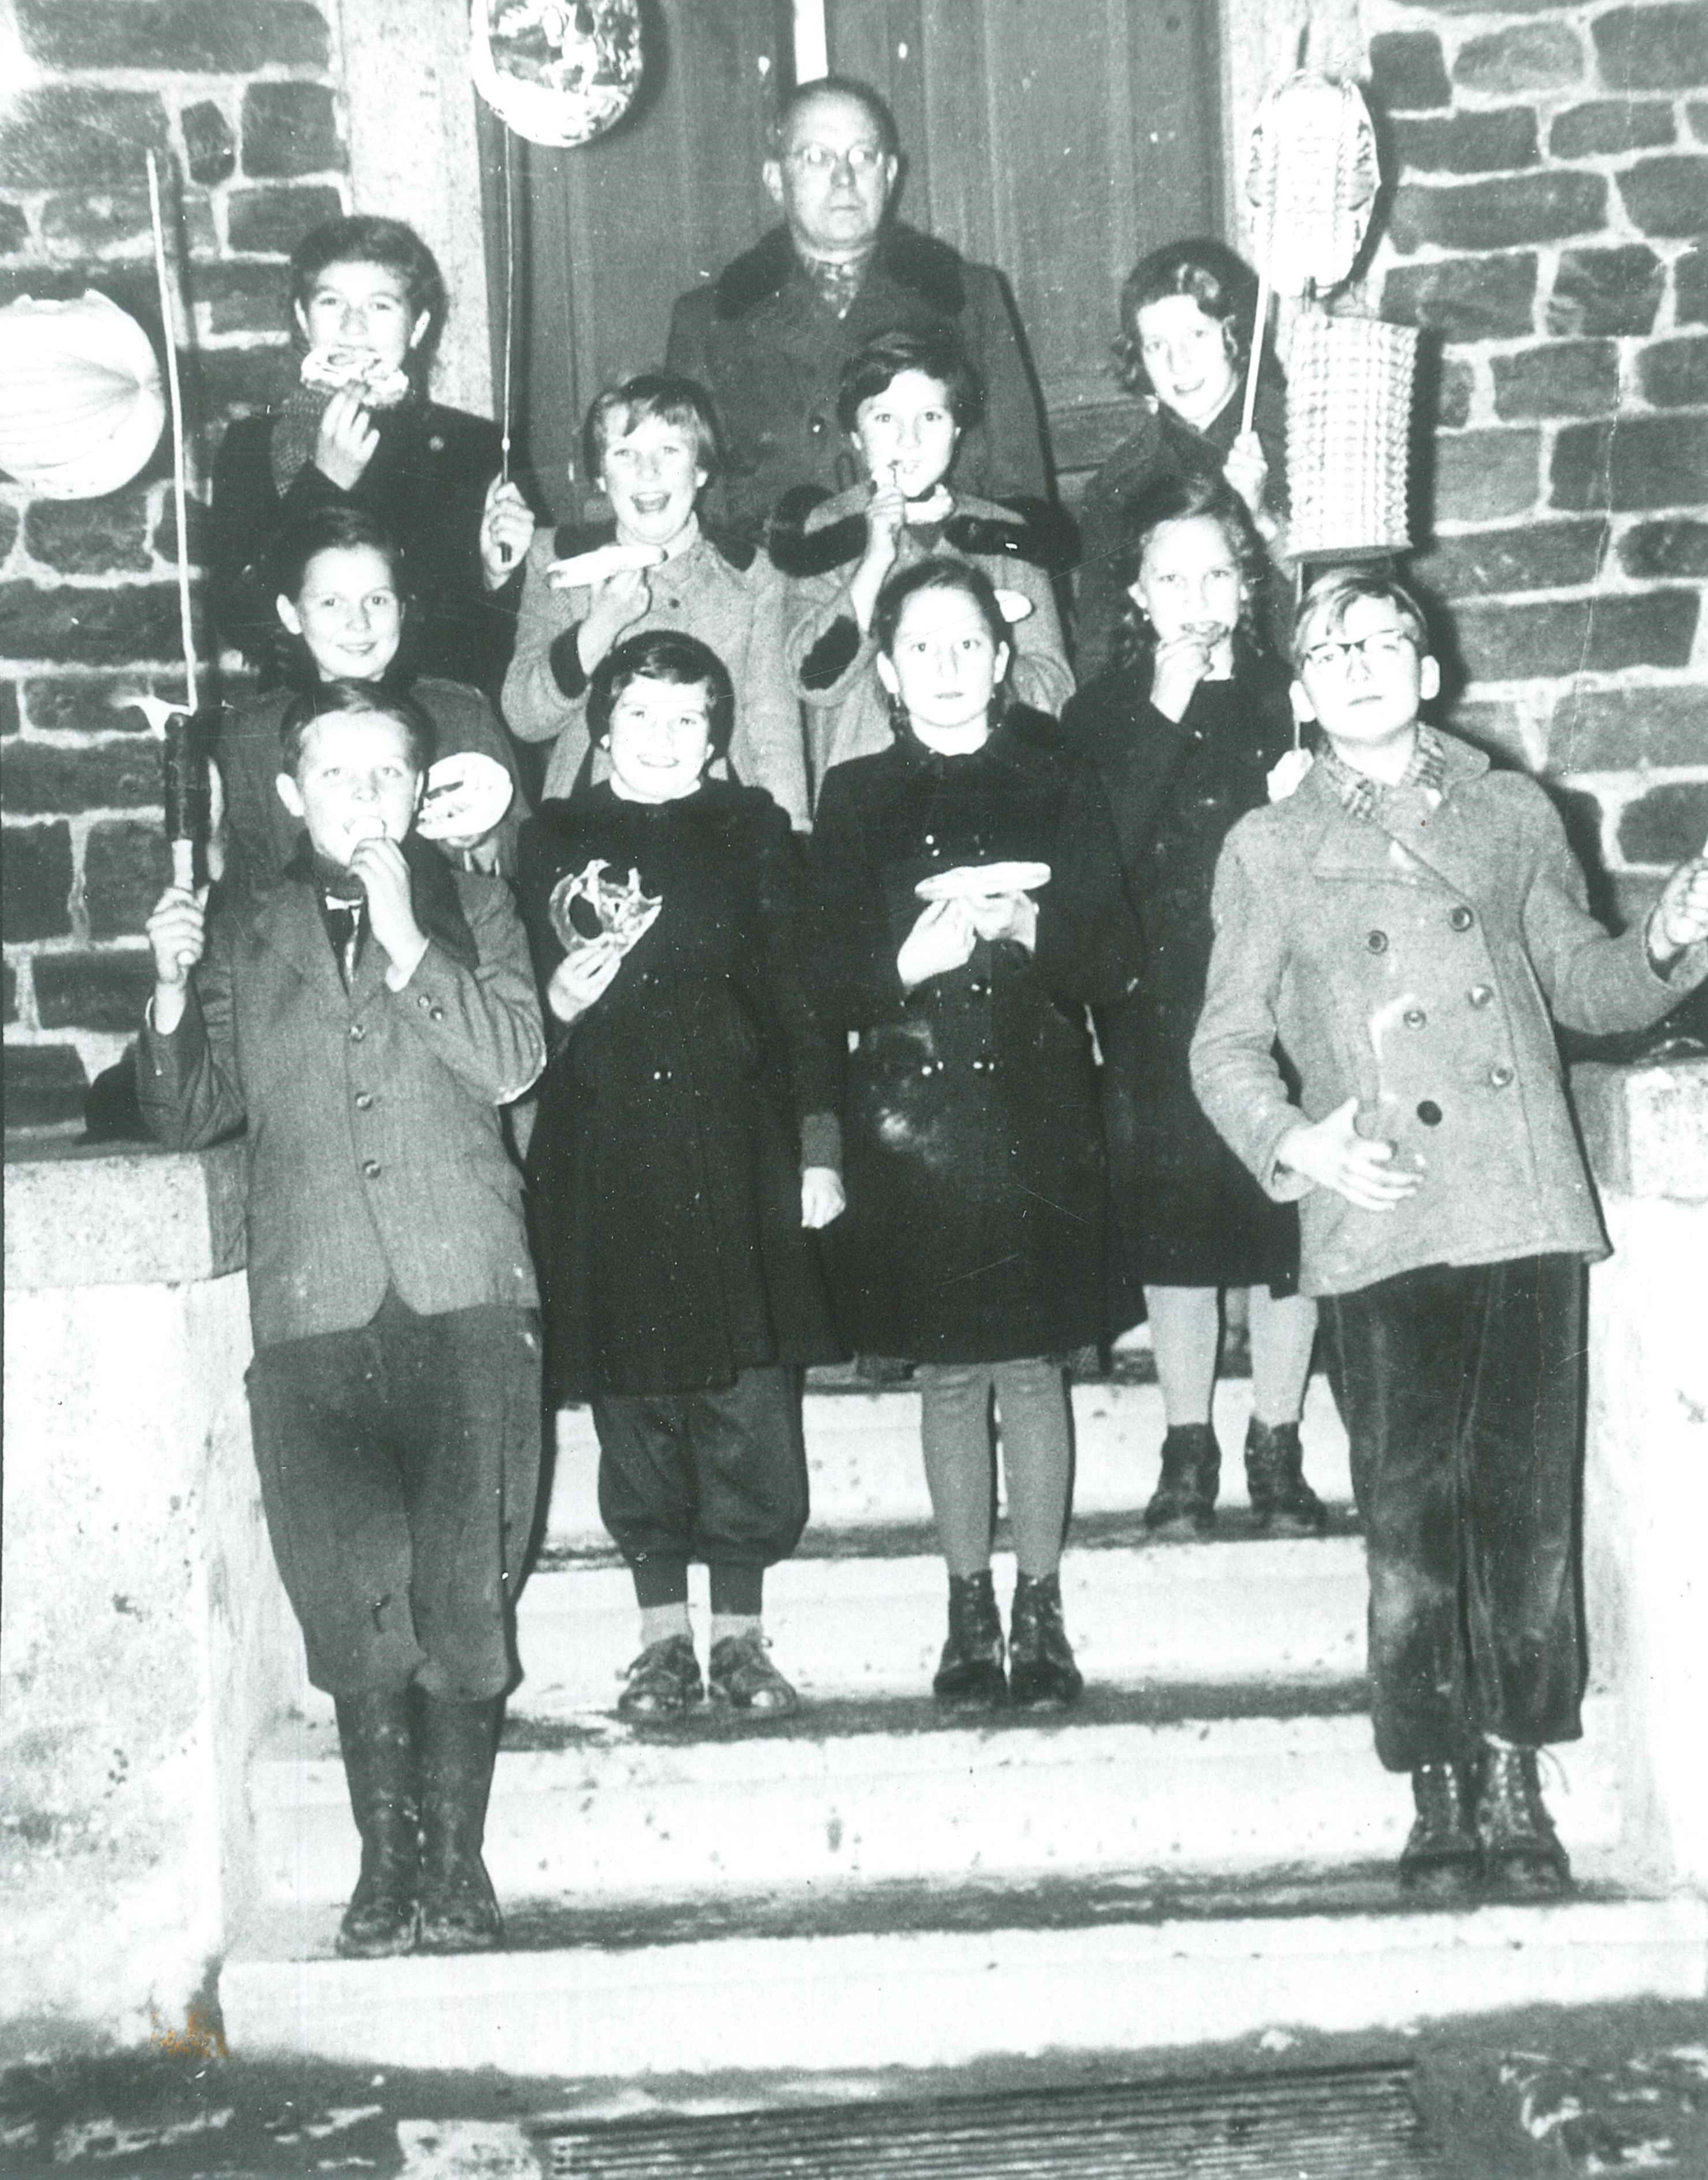 Klassenfoto, Katholische Schule "Schönblick", Bendorf-Stromberg, 1956 (REM CC BY-NC-SA)